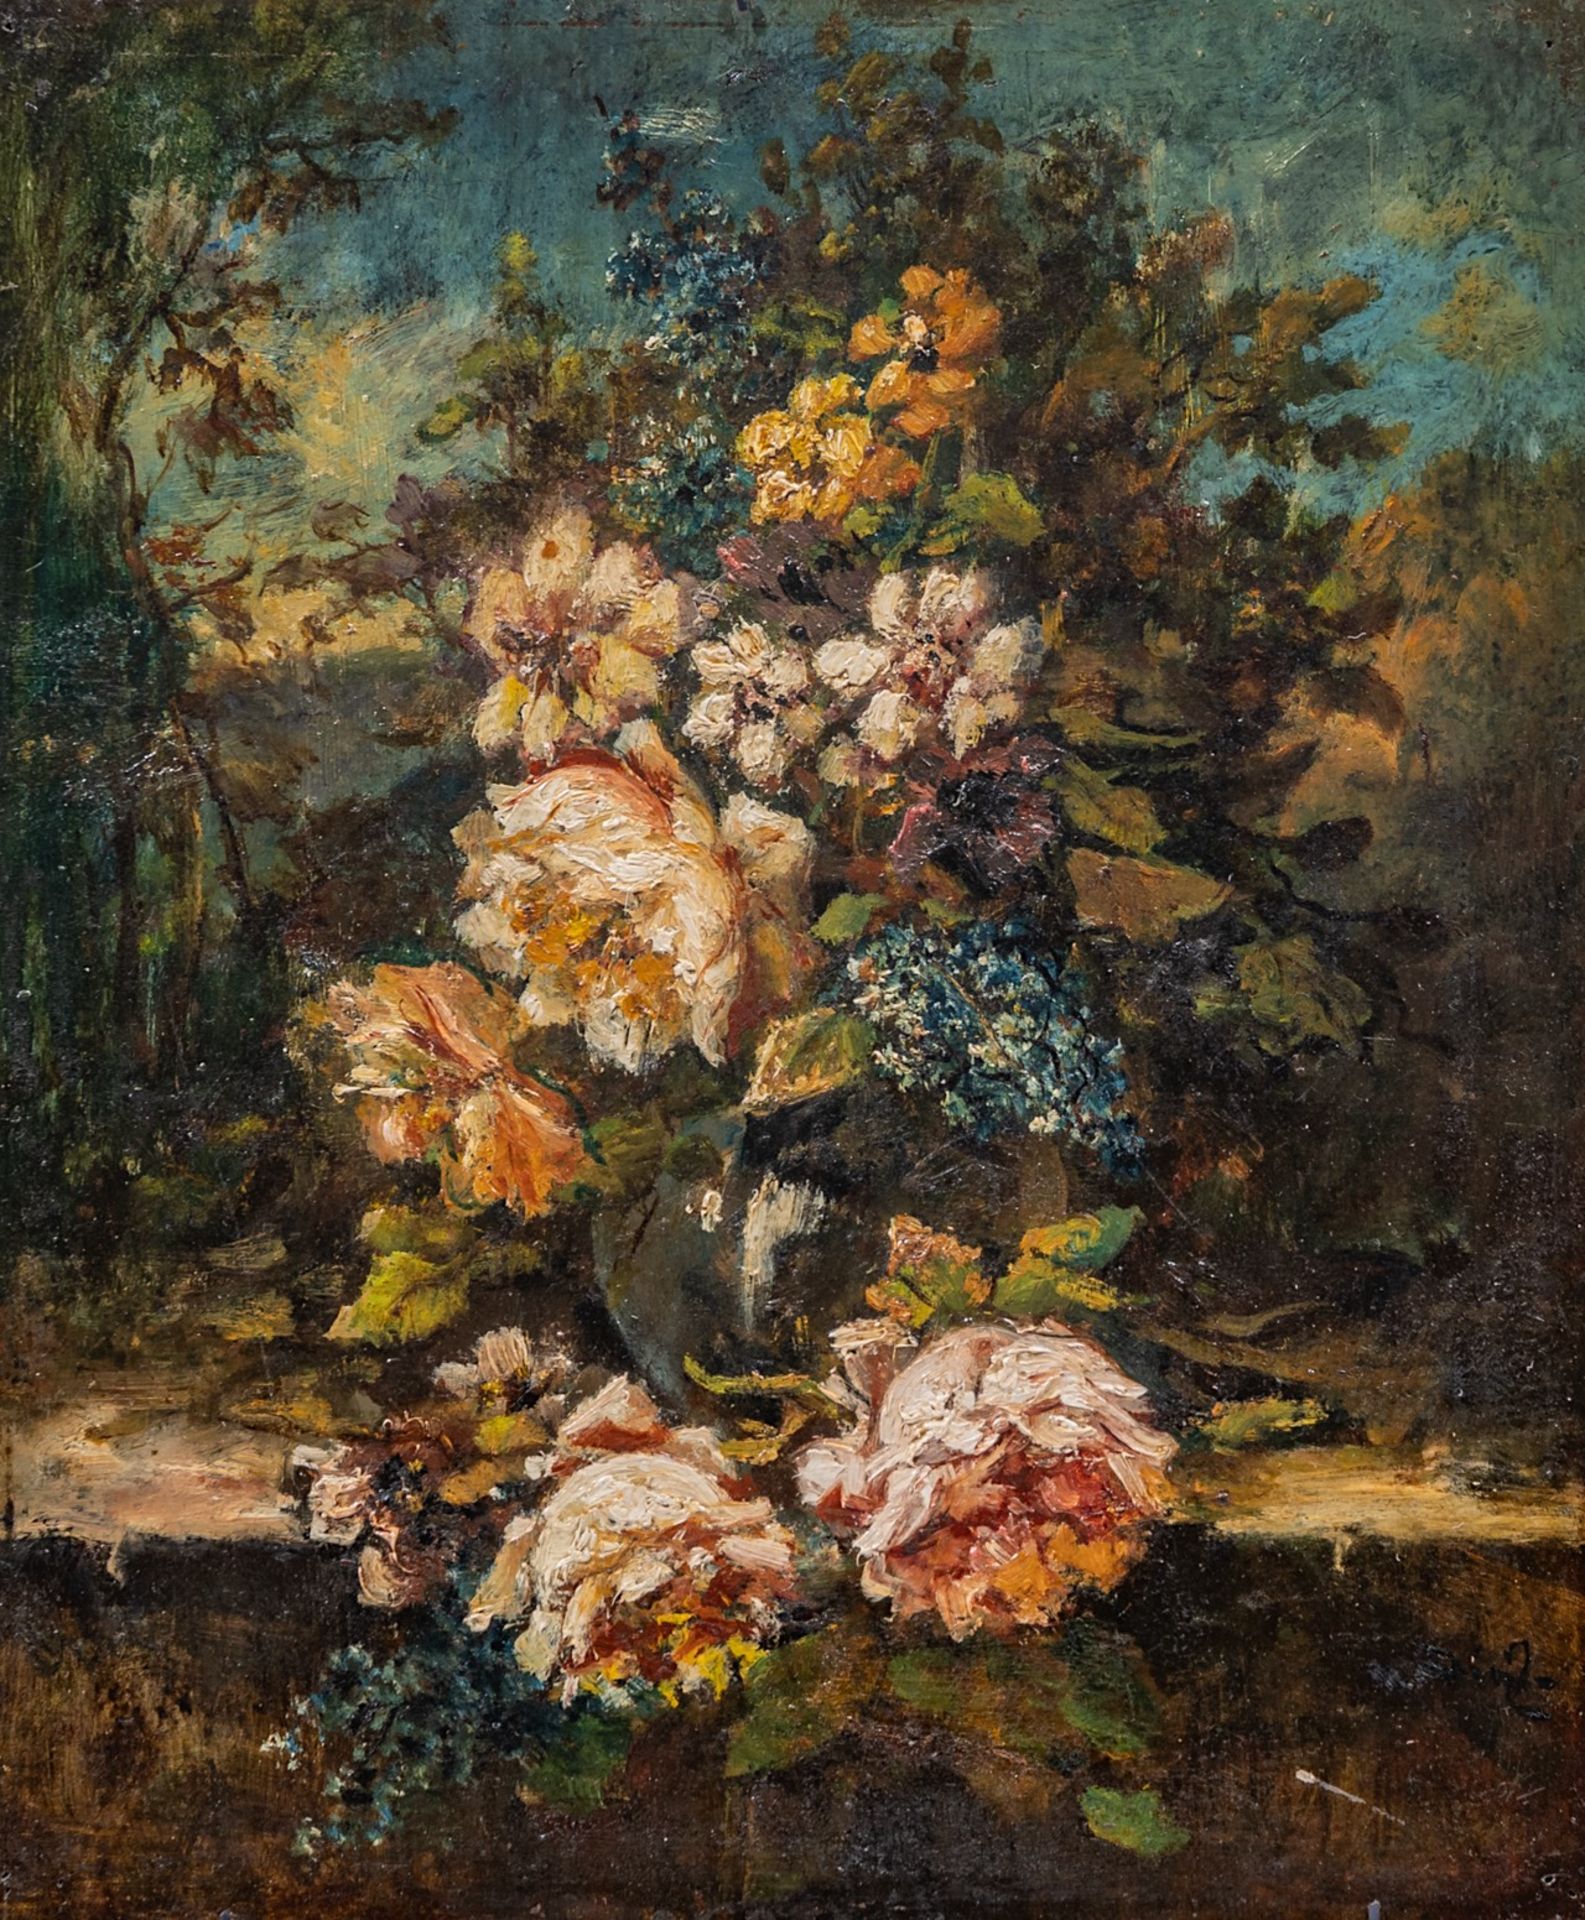 Narcisse Diaz de la Pena (1807-1876), flower still life, oil on mahogany 36 x 30 cm. (14.1 x 11.8 in